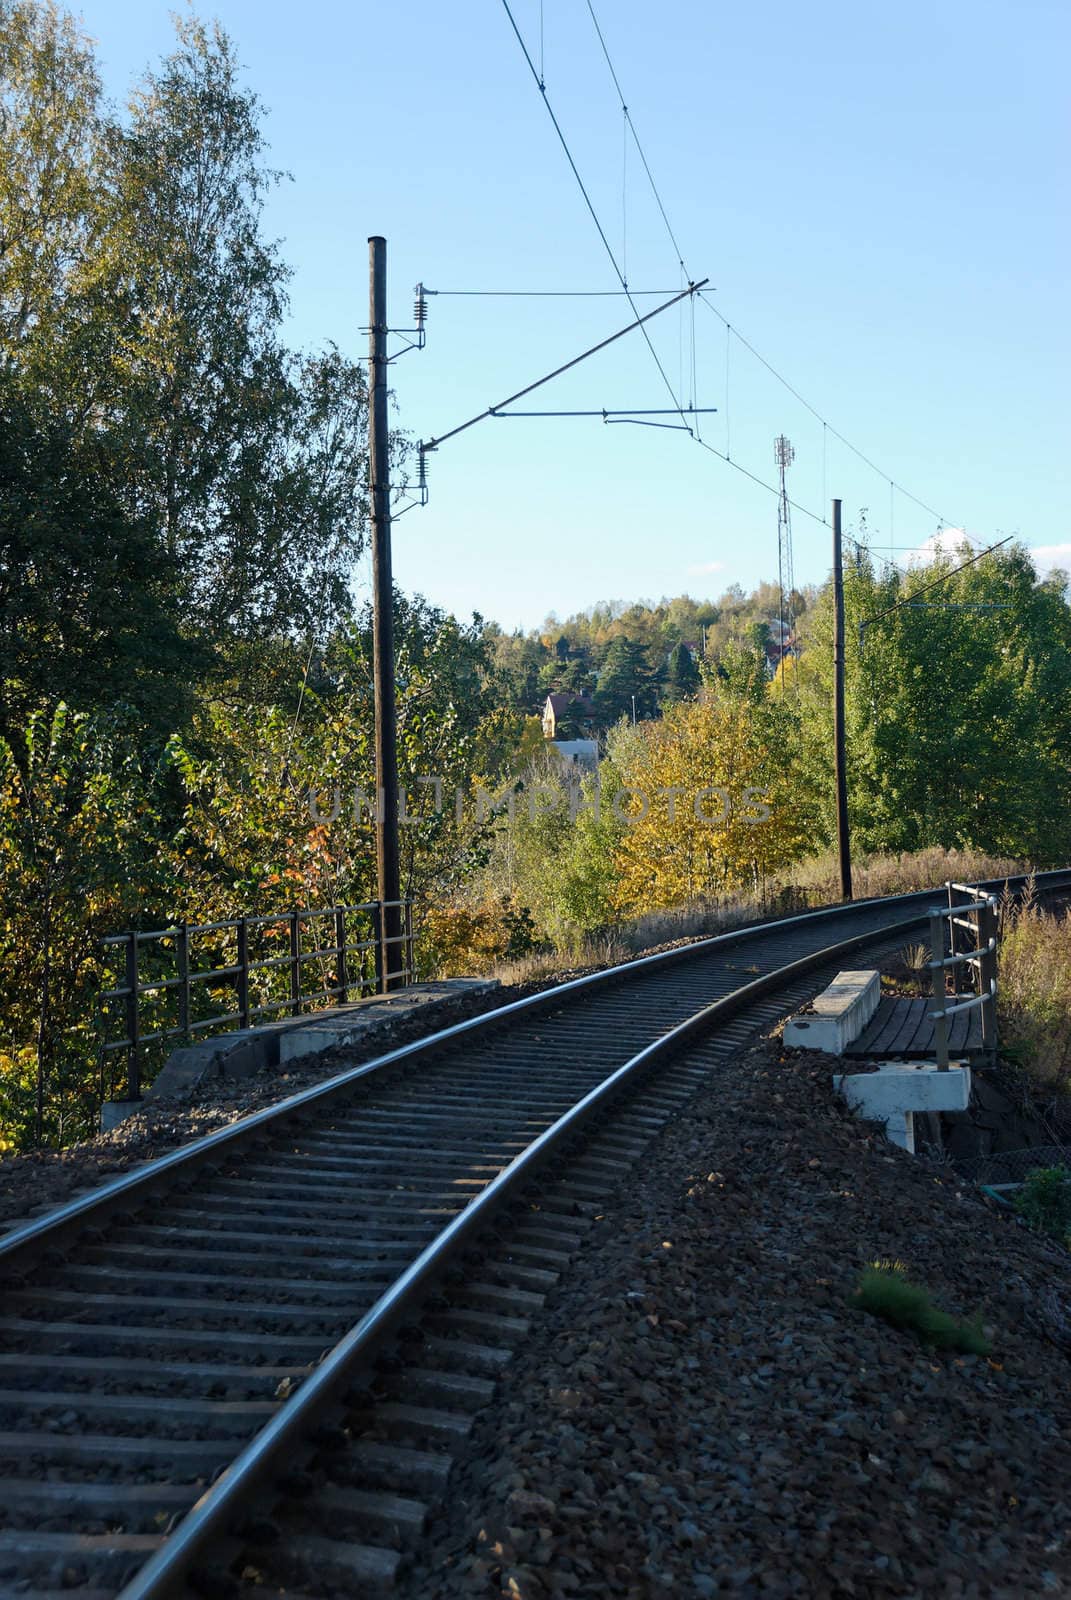 Single line railway track in autumn.
